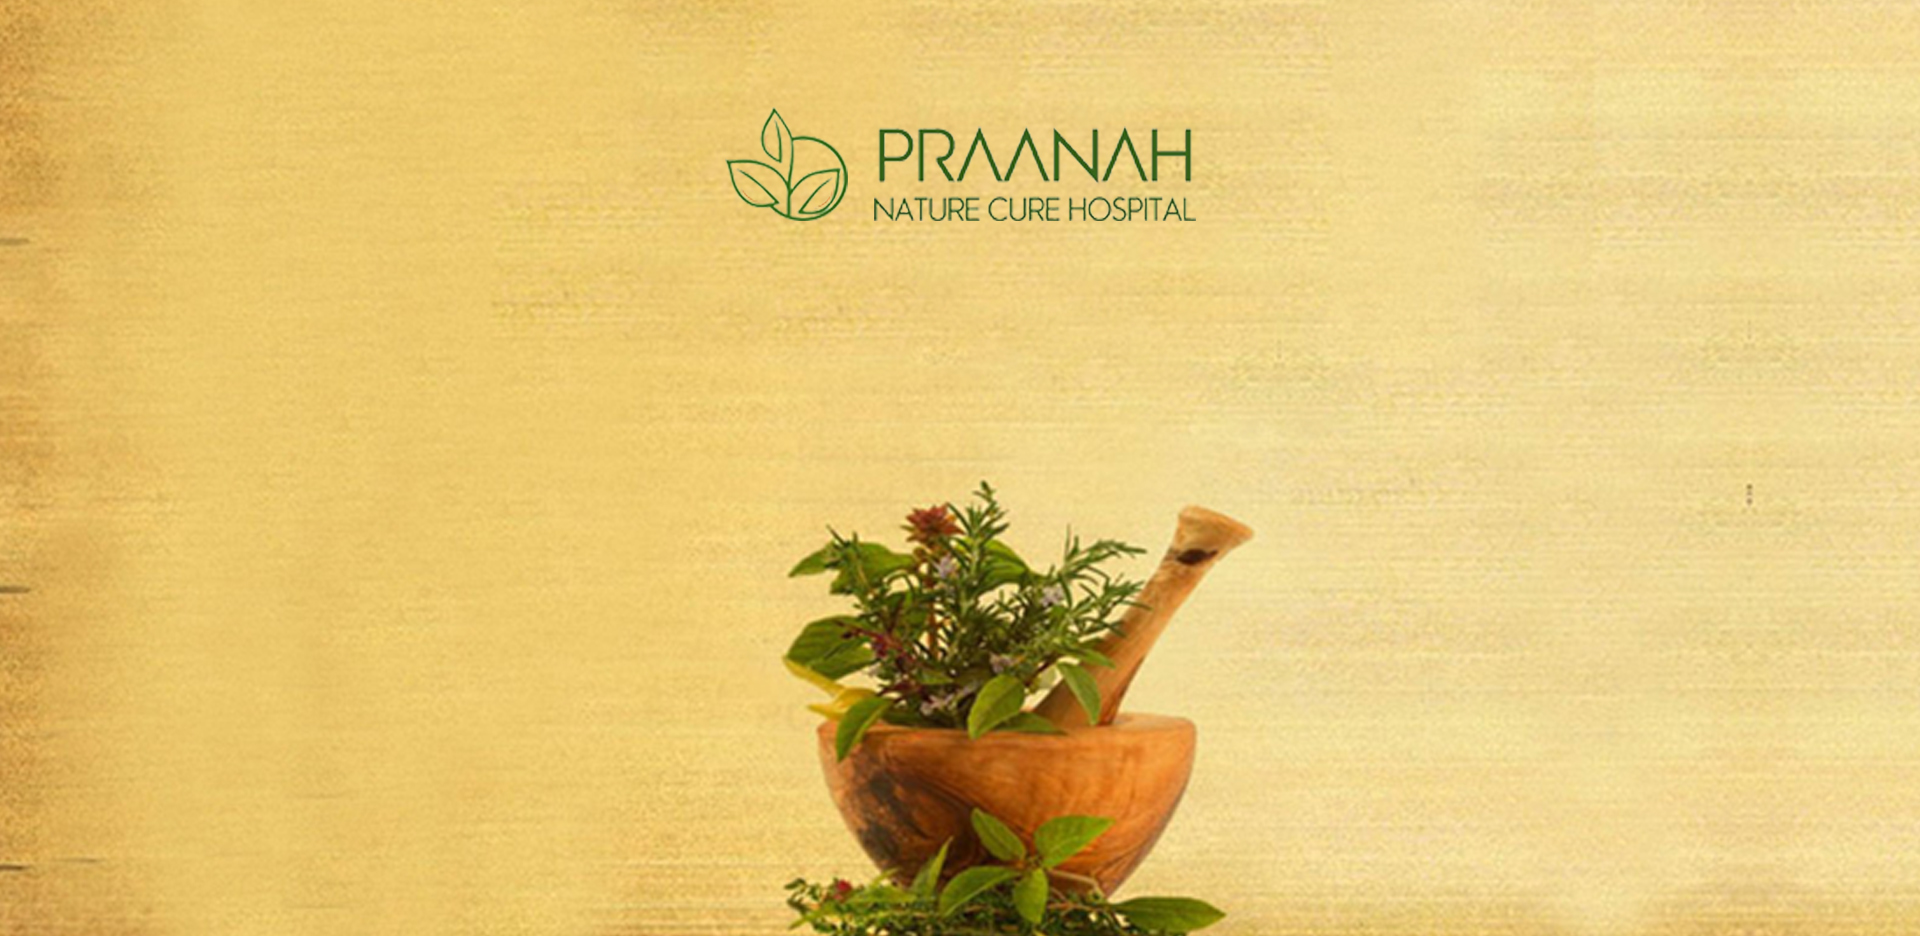 Praanah Nature Cure